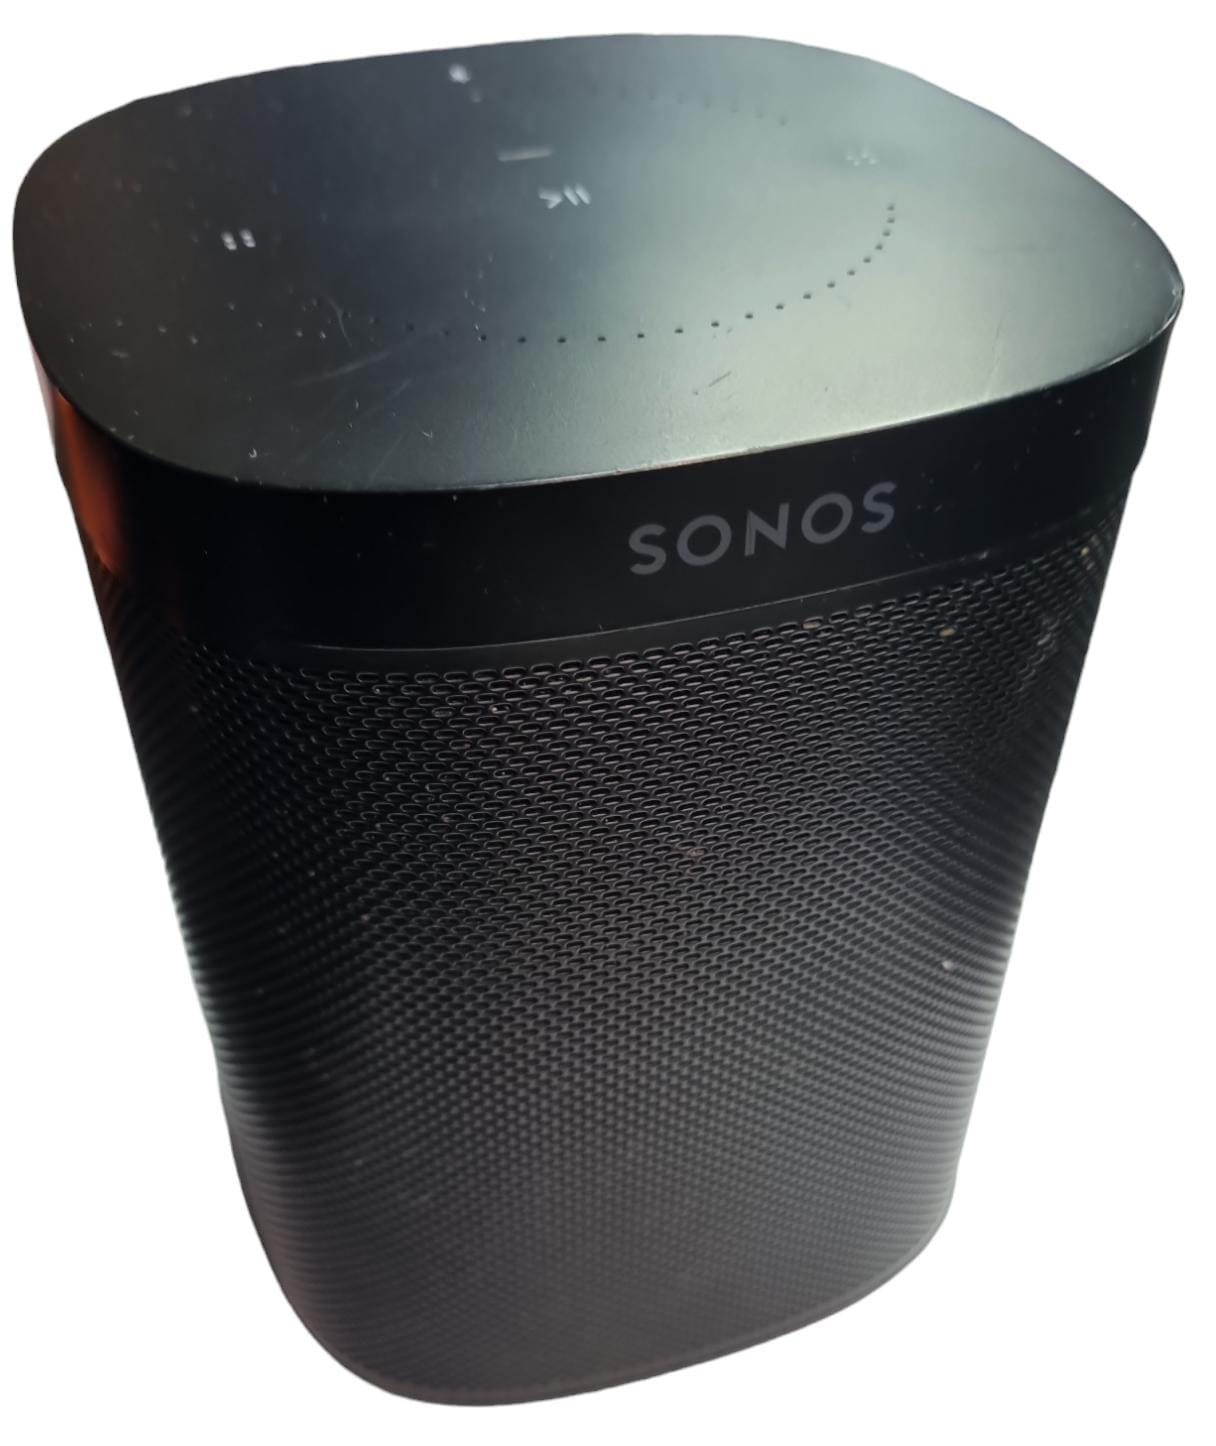 Sonos One - 2nd Generation - Black - No Box